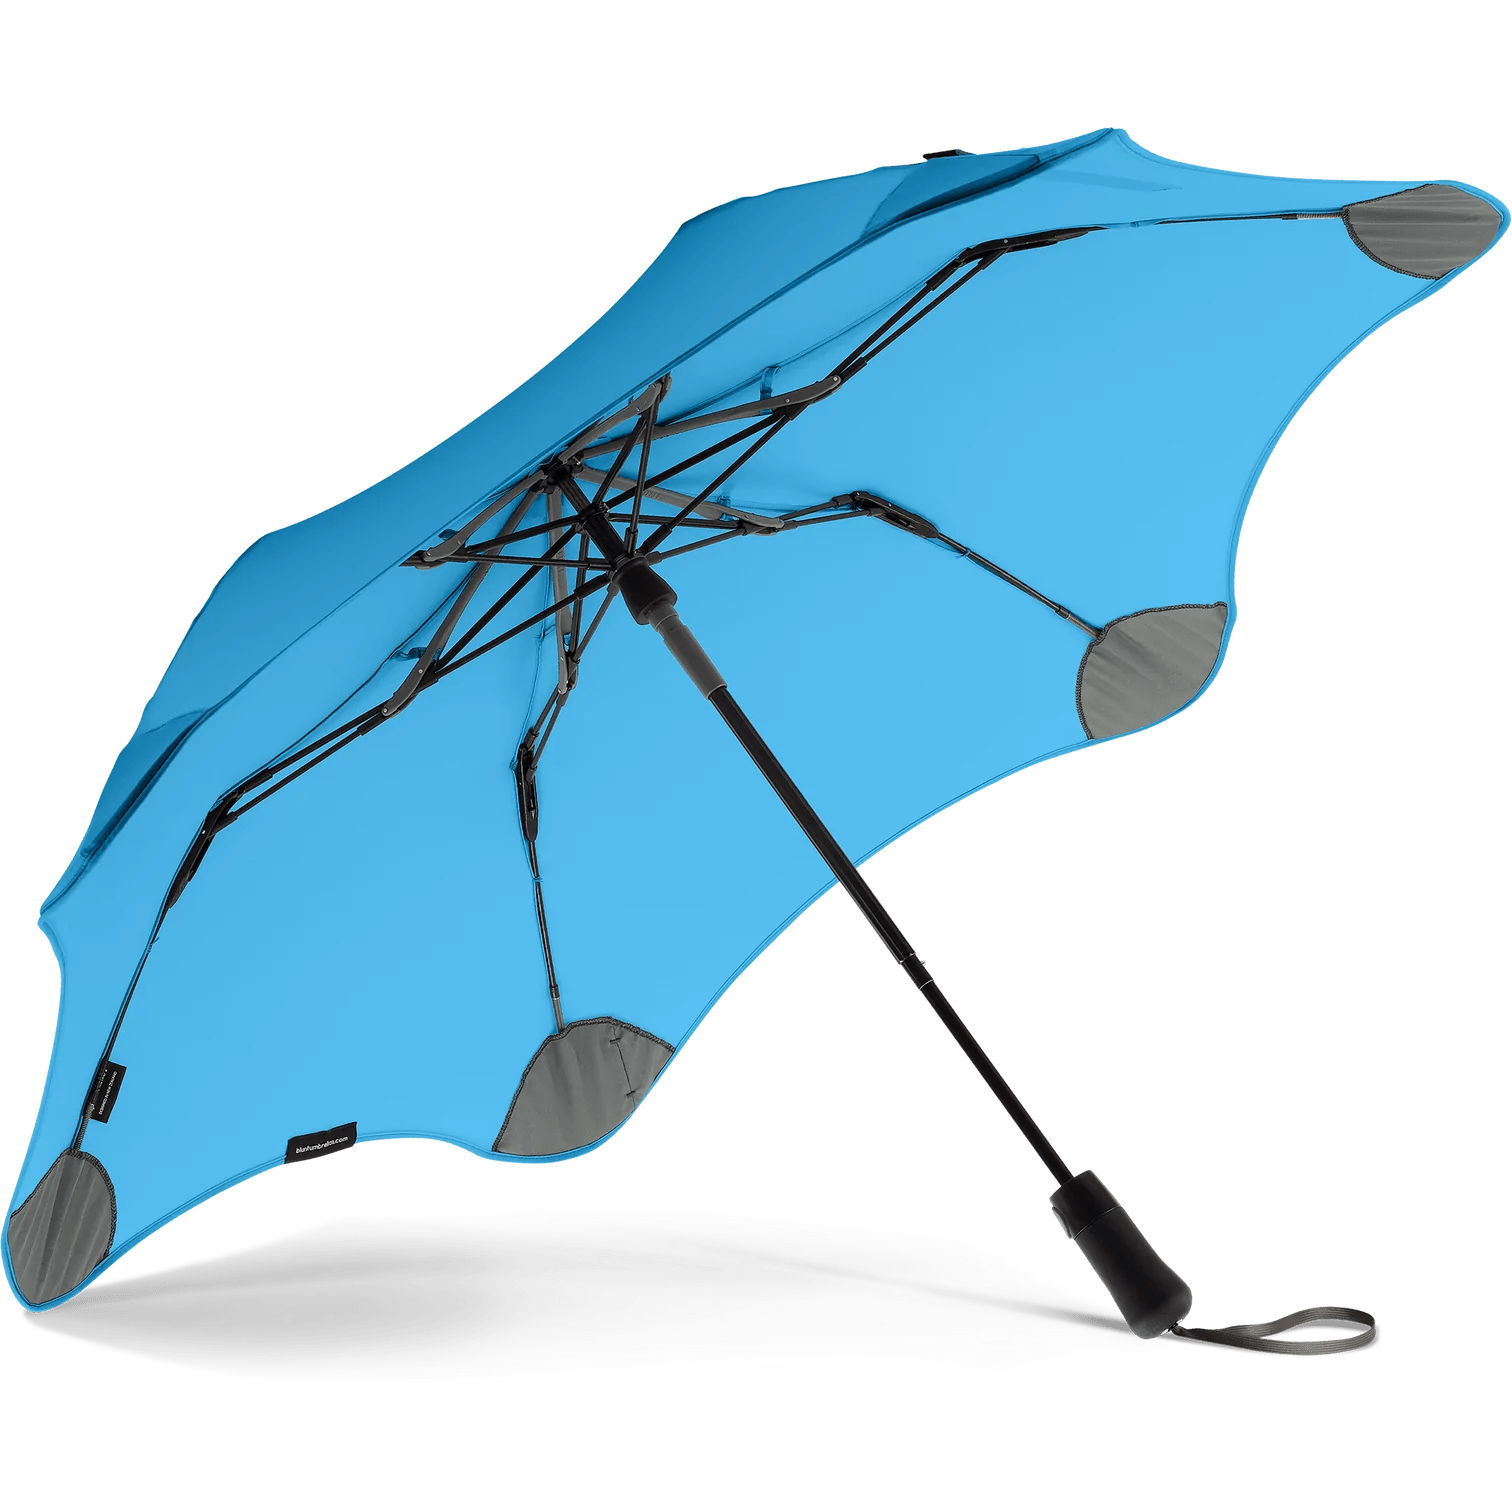 Blunt Metro Umbrella - My Filosophy